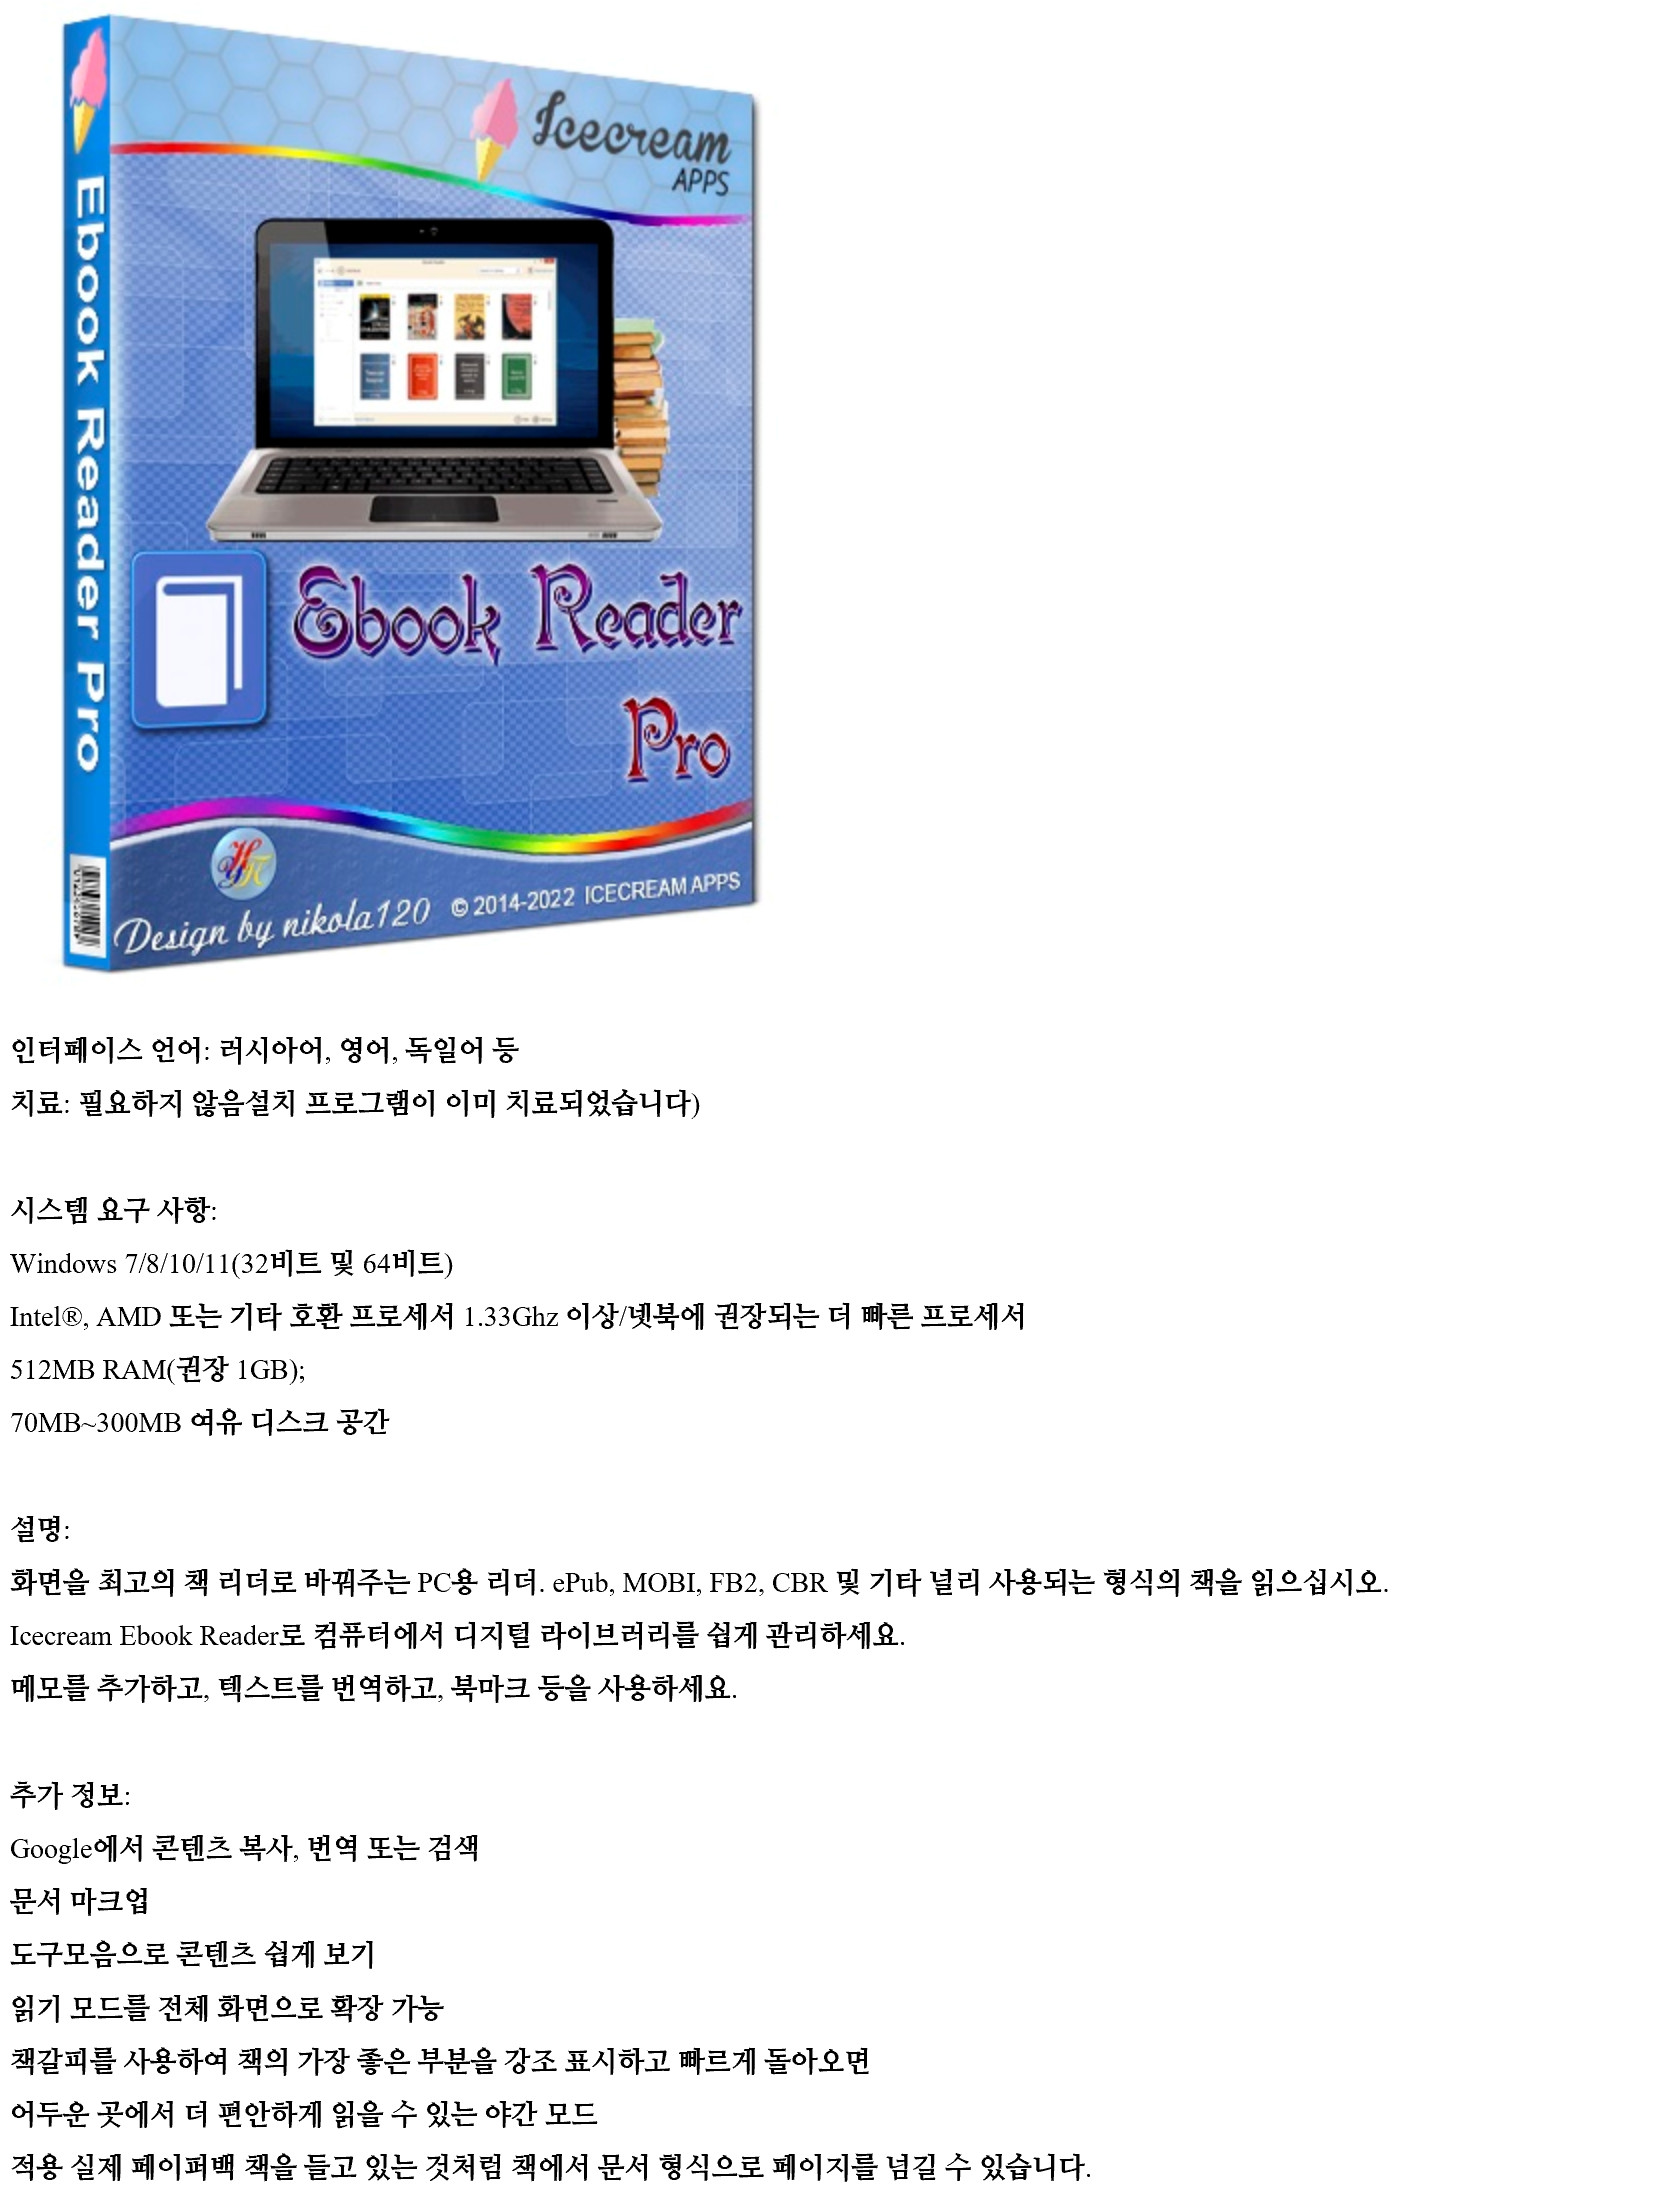 IceCream Ebook Reader 6.44 Pro for mac download free